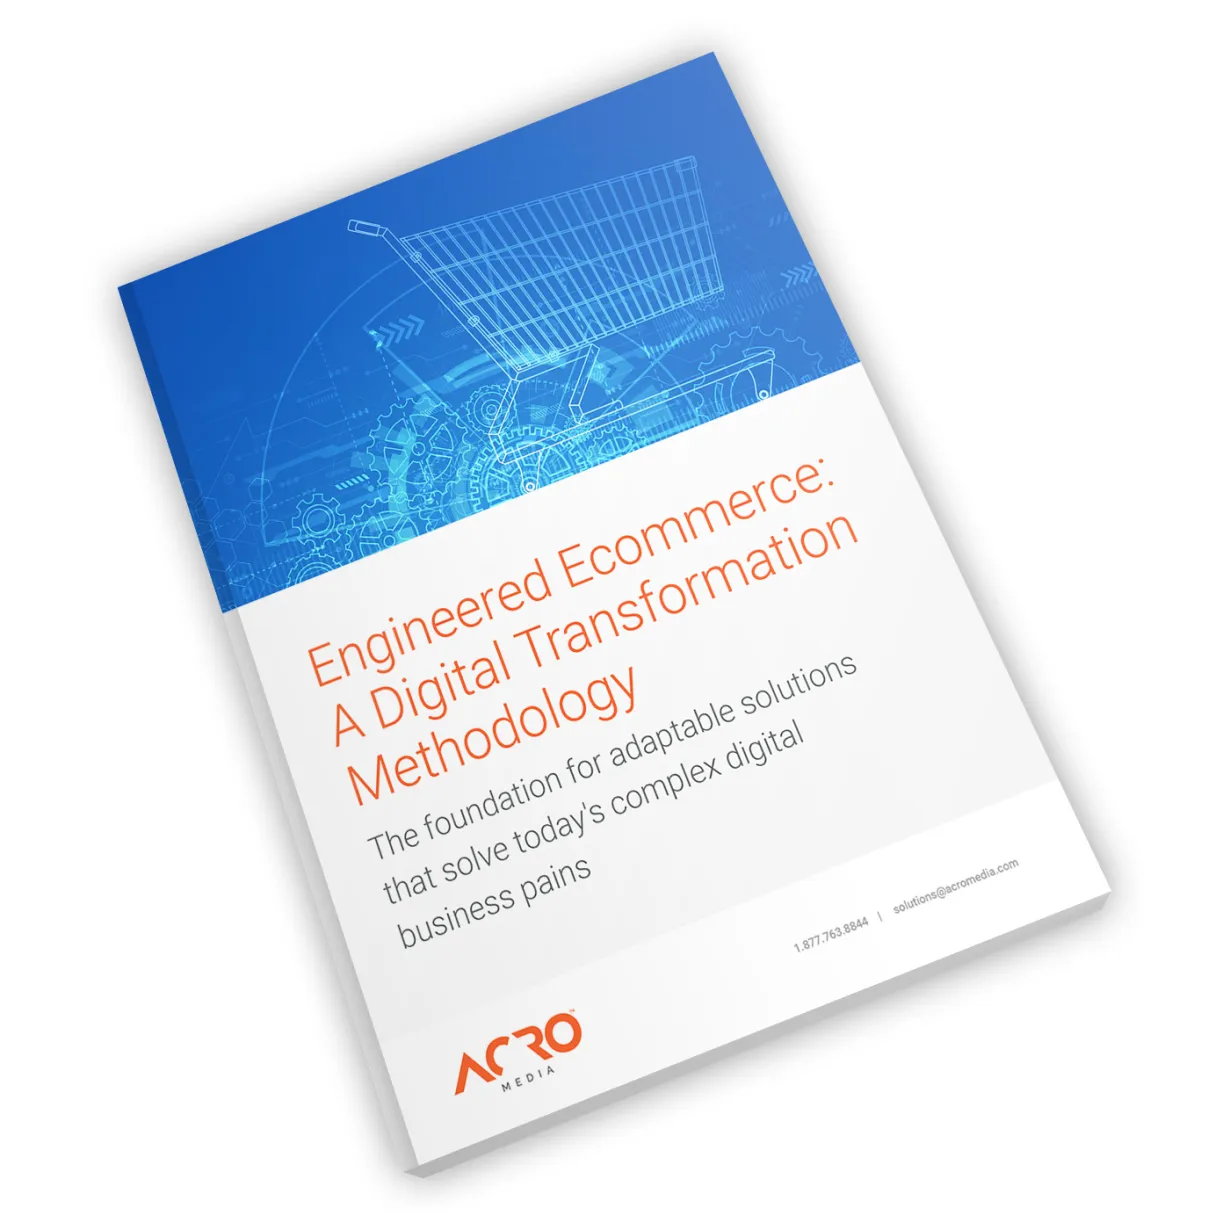 Engineered Ecommerce: A Digital Transformation Methodology Ebook